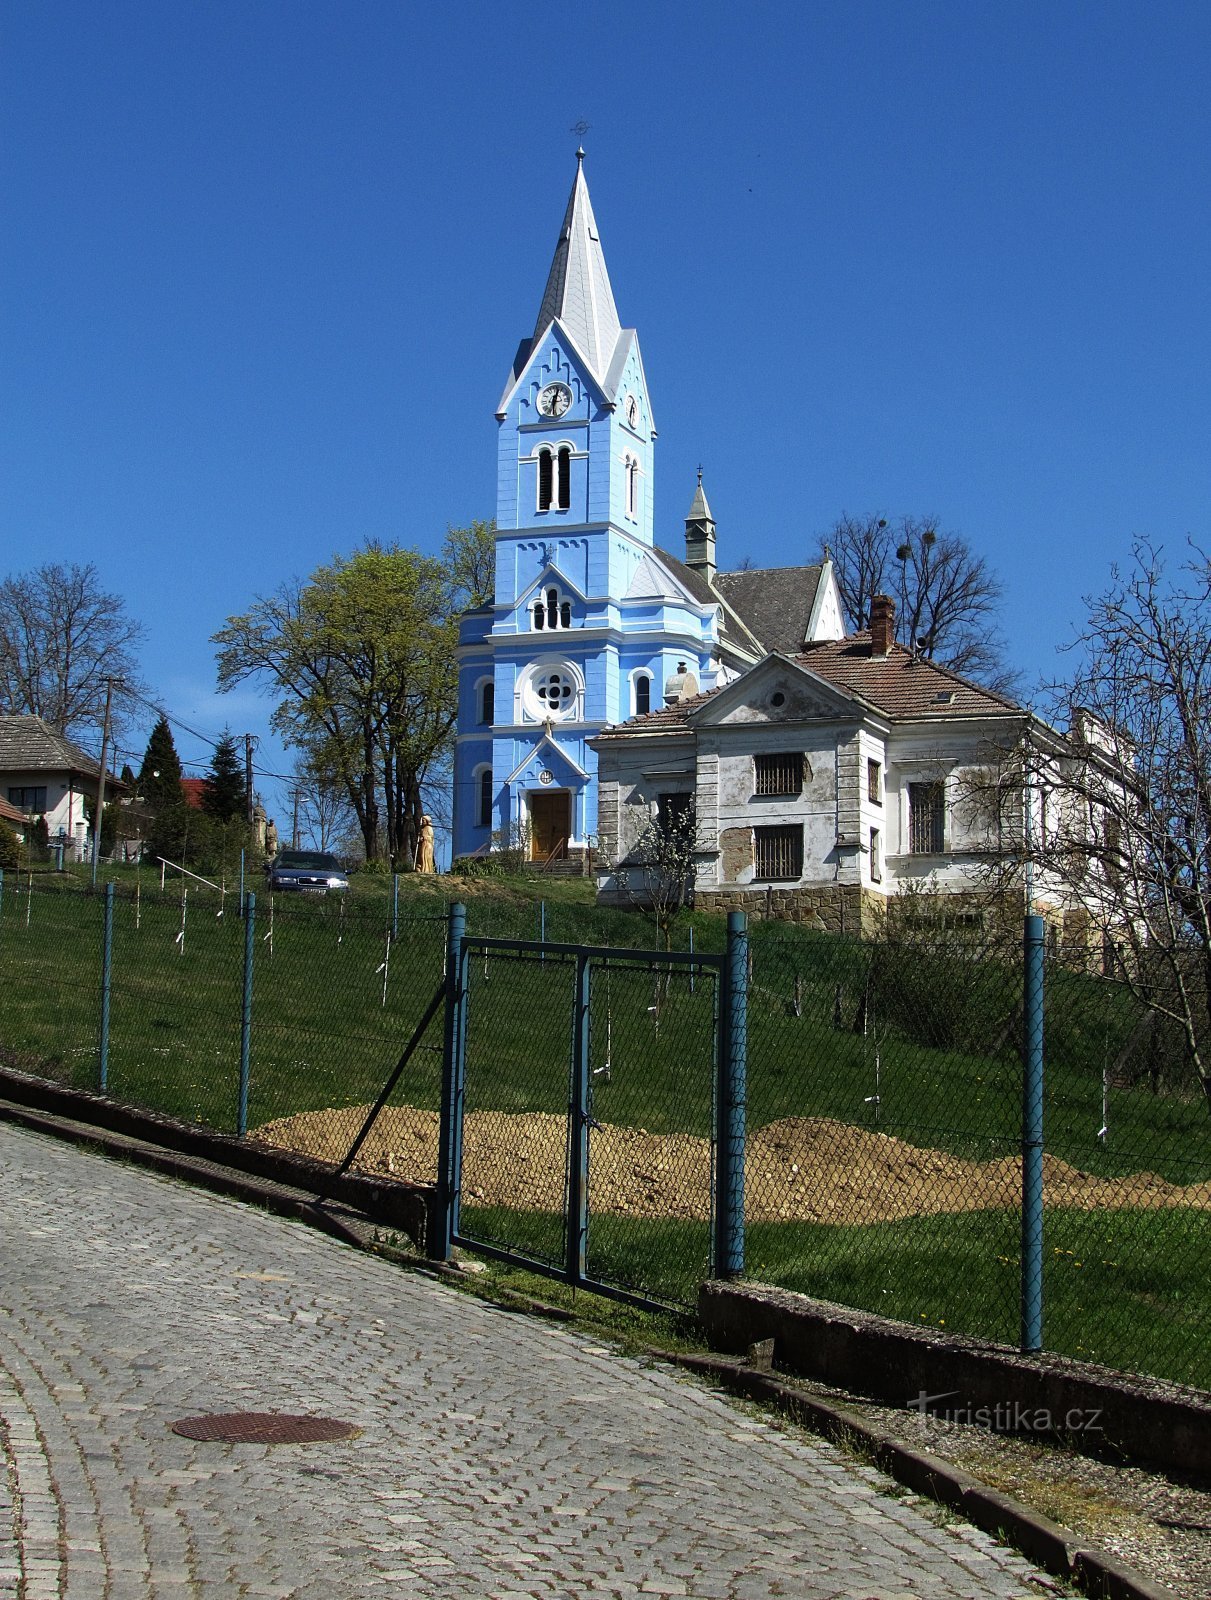 Stříbrnice - teren kościoła św. Prokopa